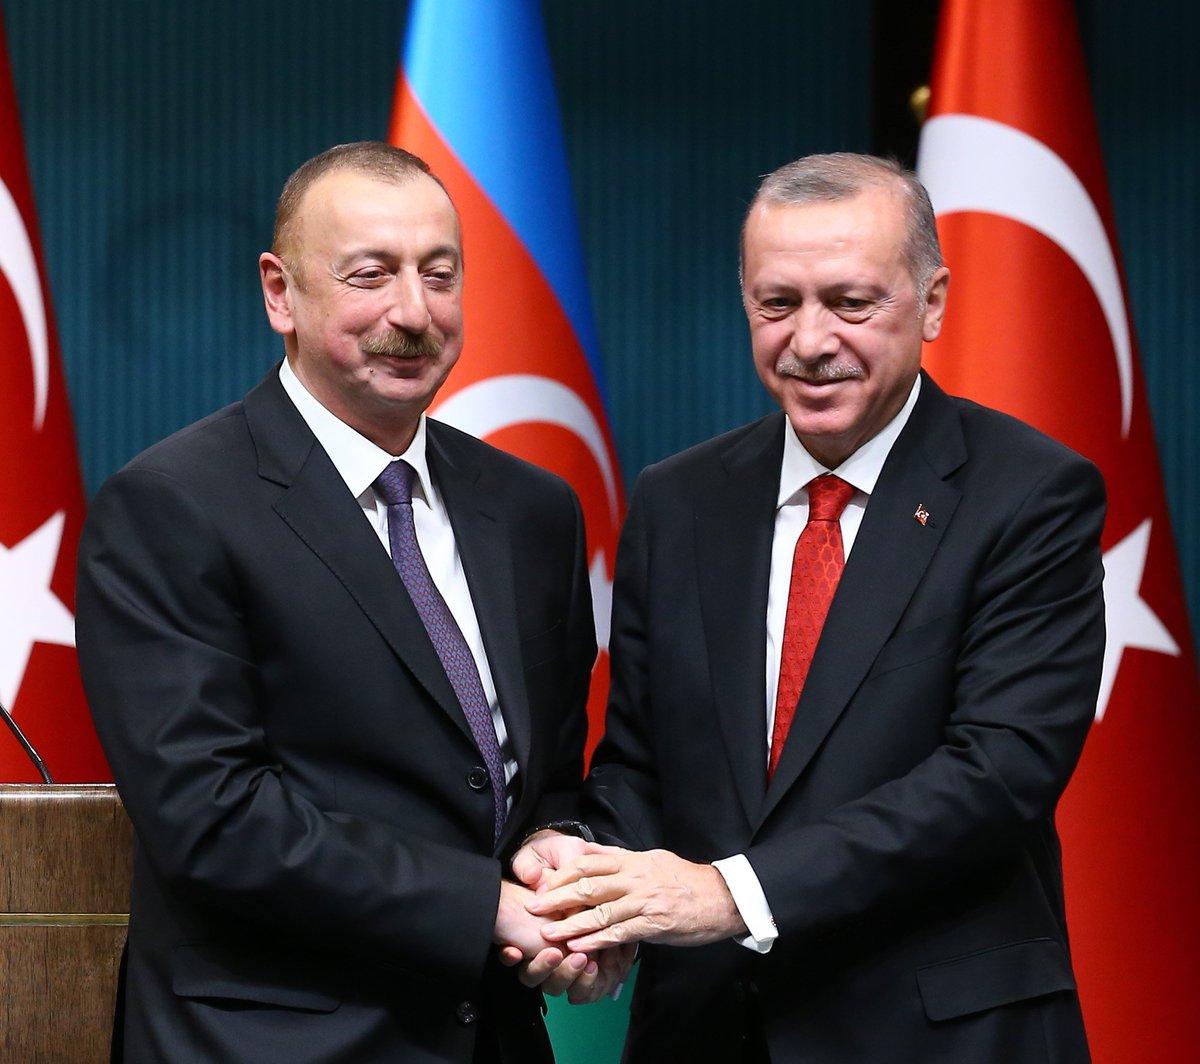 Erdogan congratulates Azerbaijan on national holiday in letter to President Aliyev